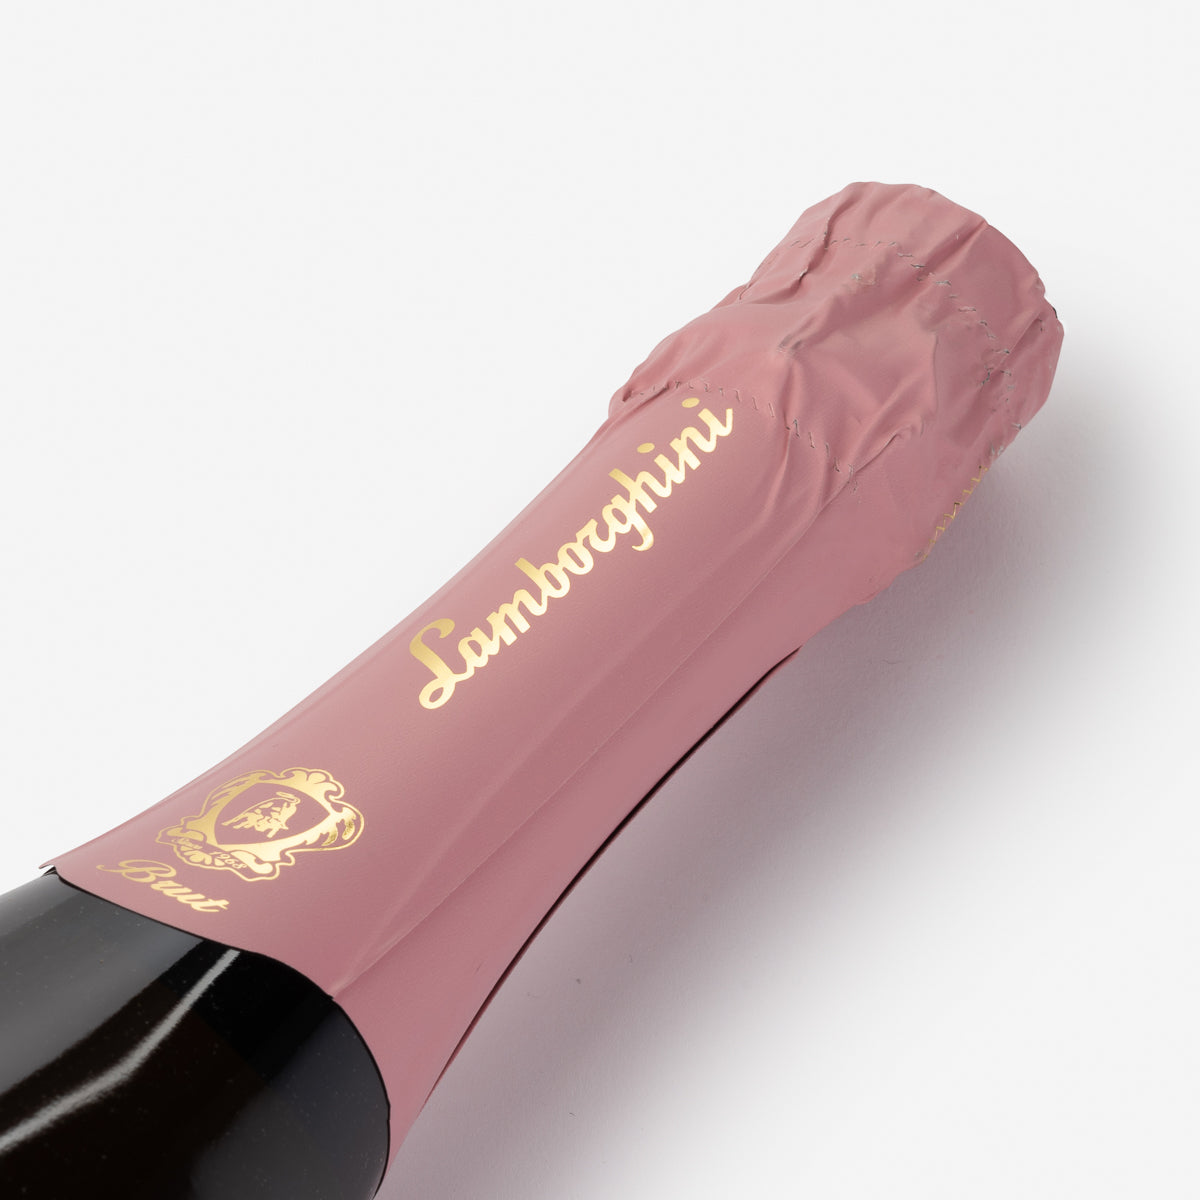 Lamborghini: Rosè &quot;The Legend&quot; with Gift Set &amp; Wine Glasses